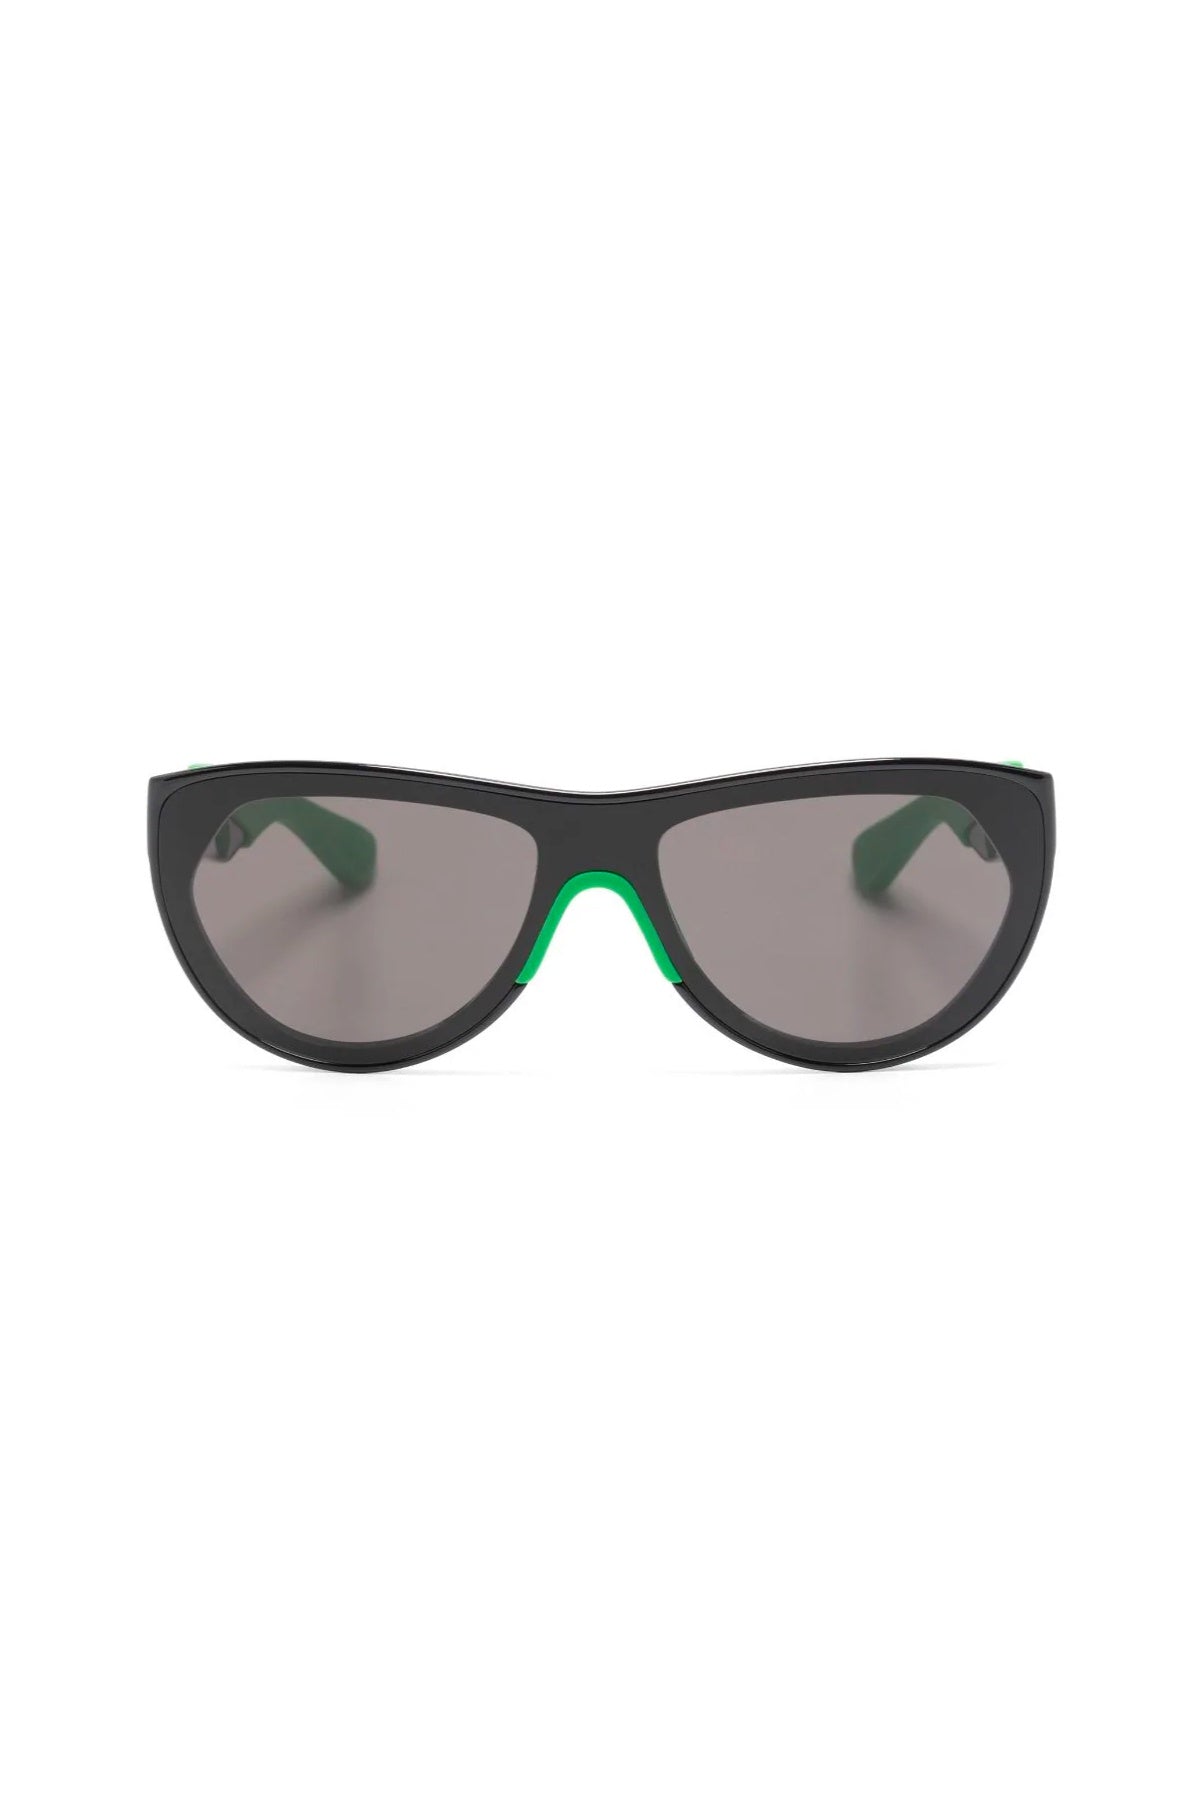 Bottega Veneta Mask Frame Sunglasses - Black